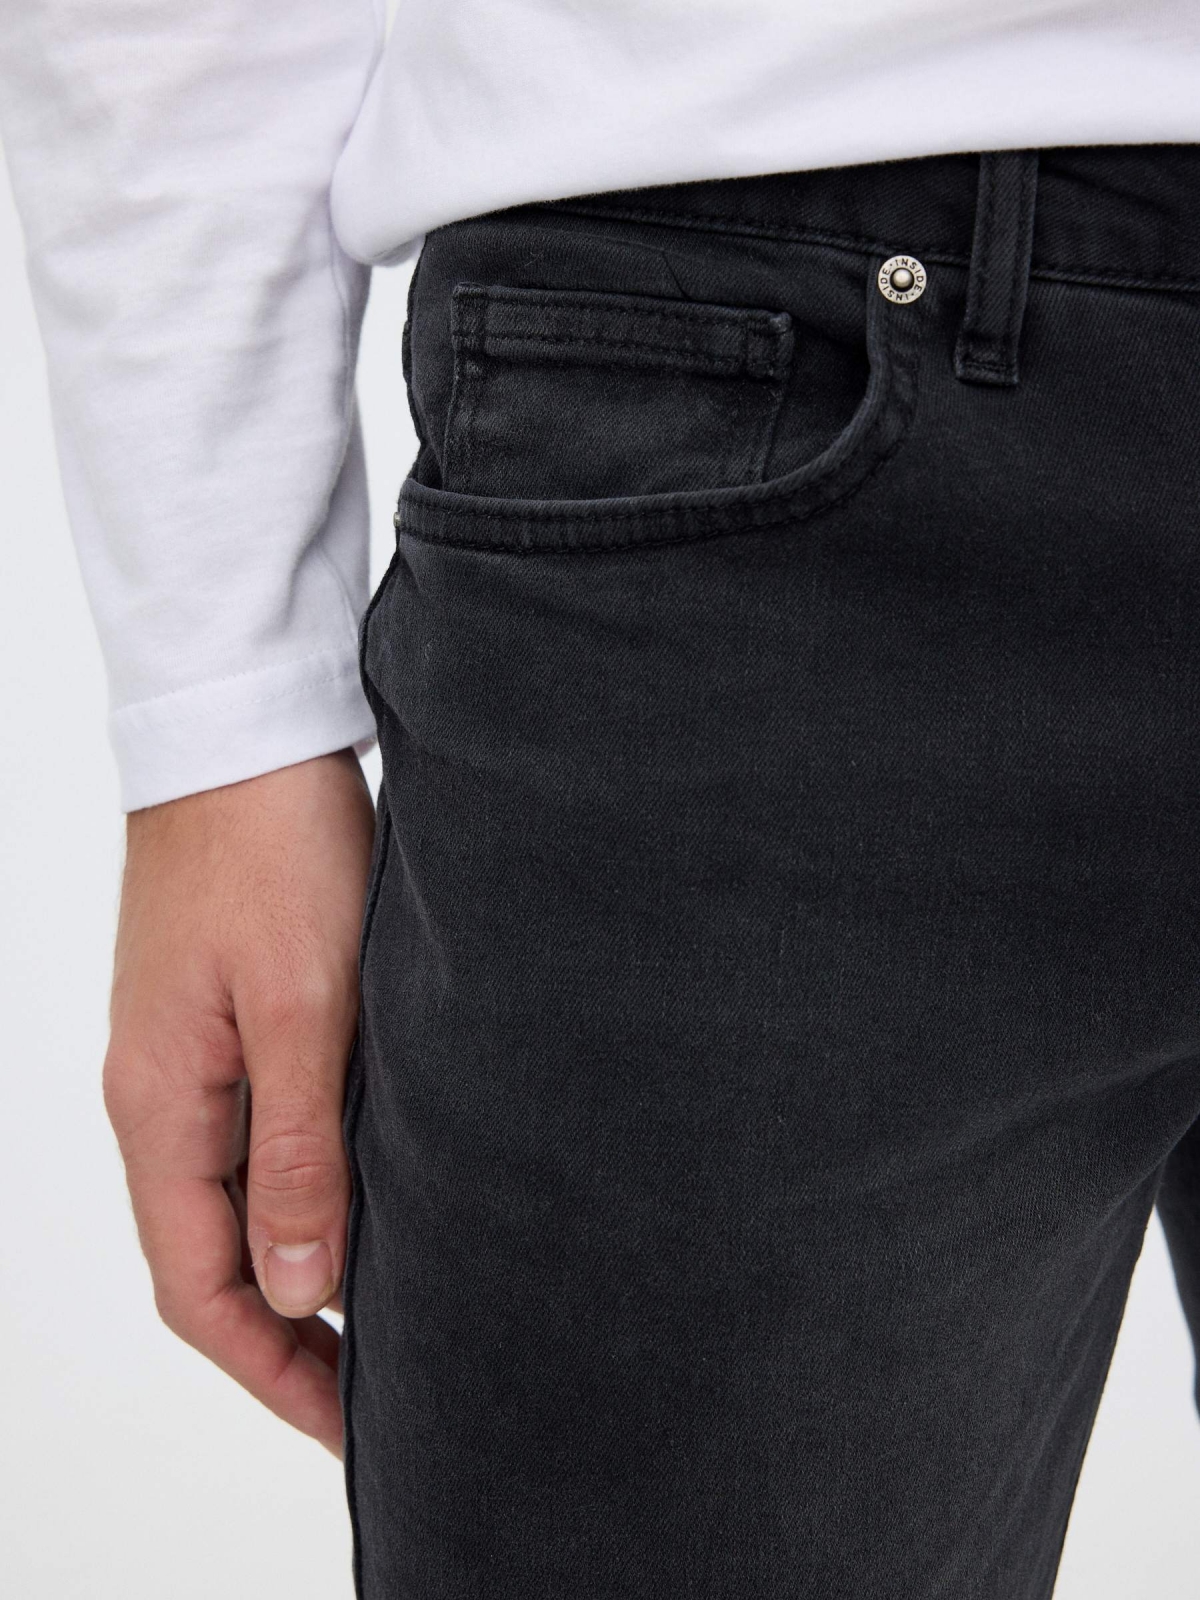 Jeans regular gris oscuro vista detalle